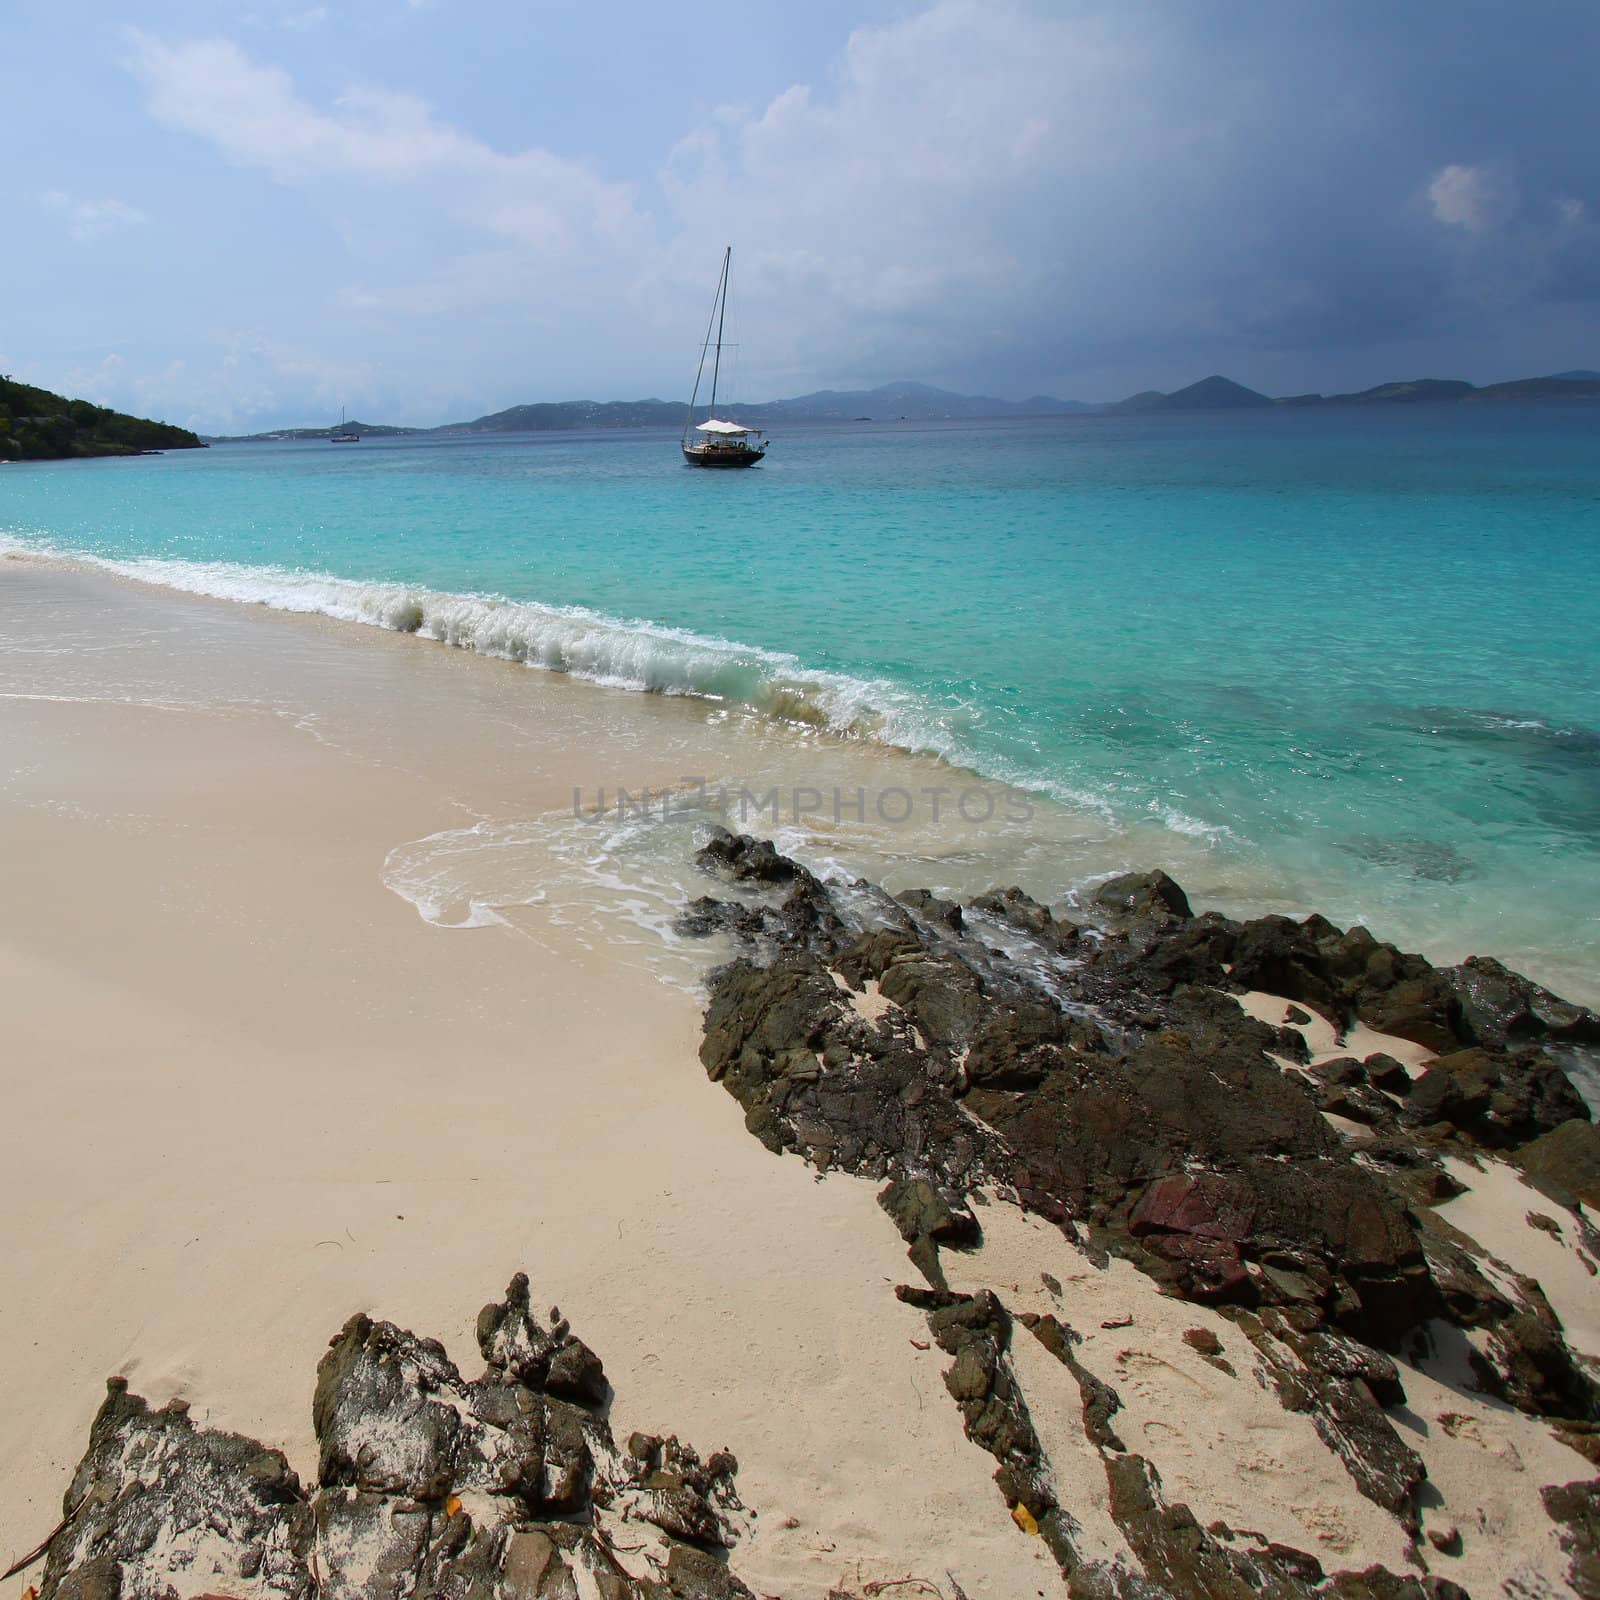 Honeymoon Bay - US Virgin Islands by Wirepec